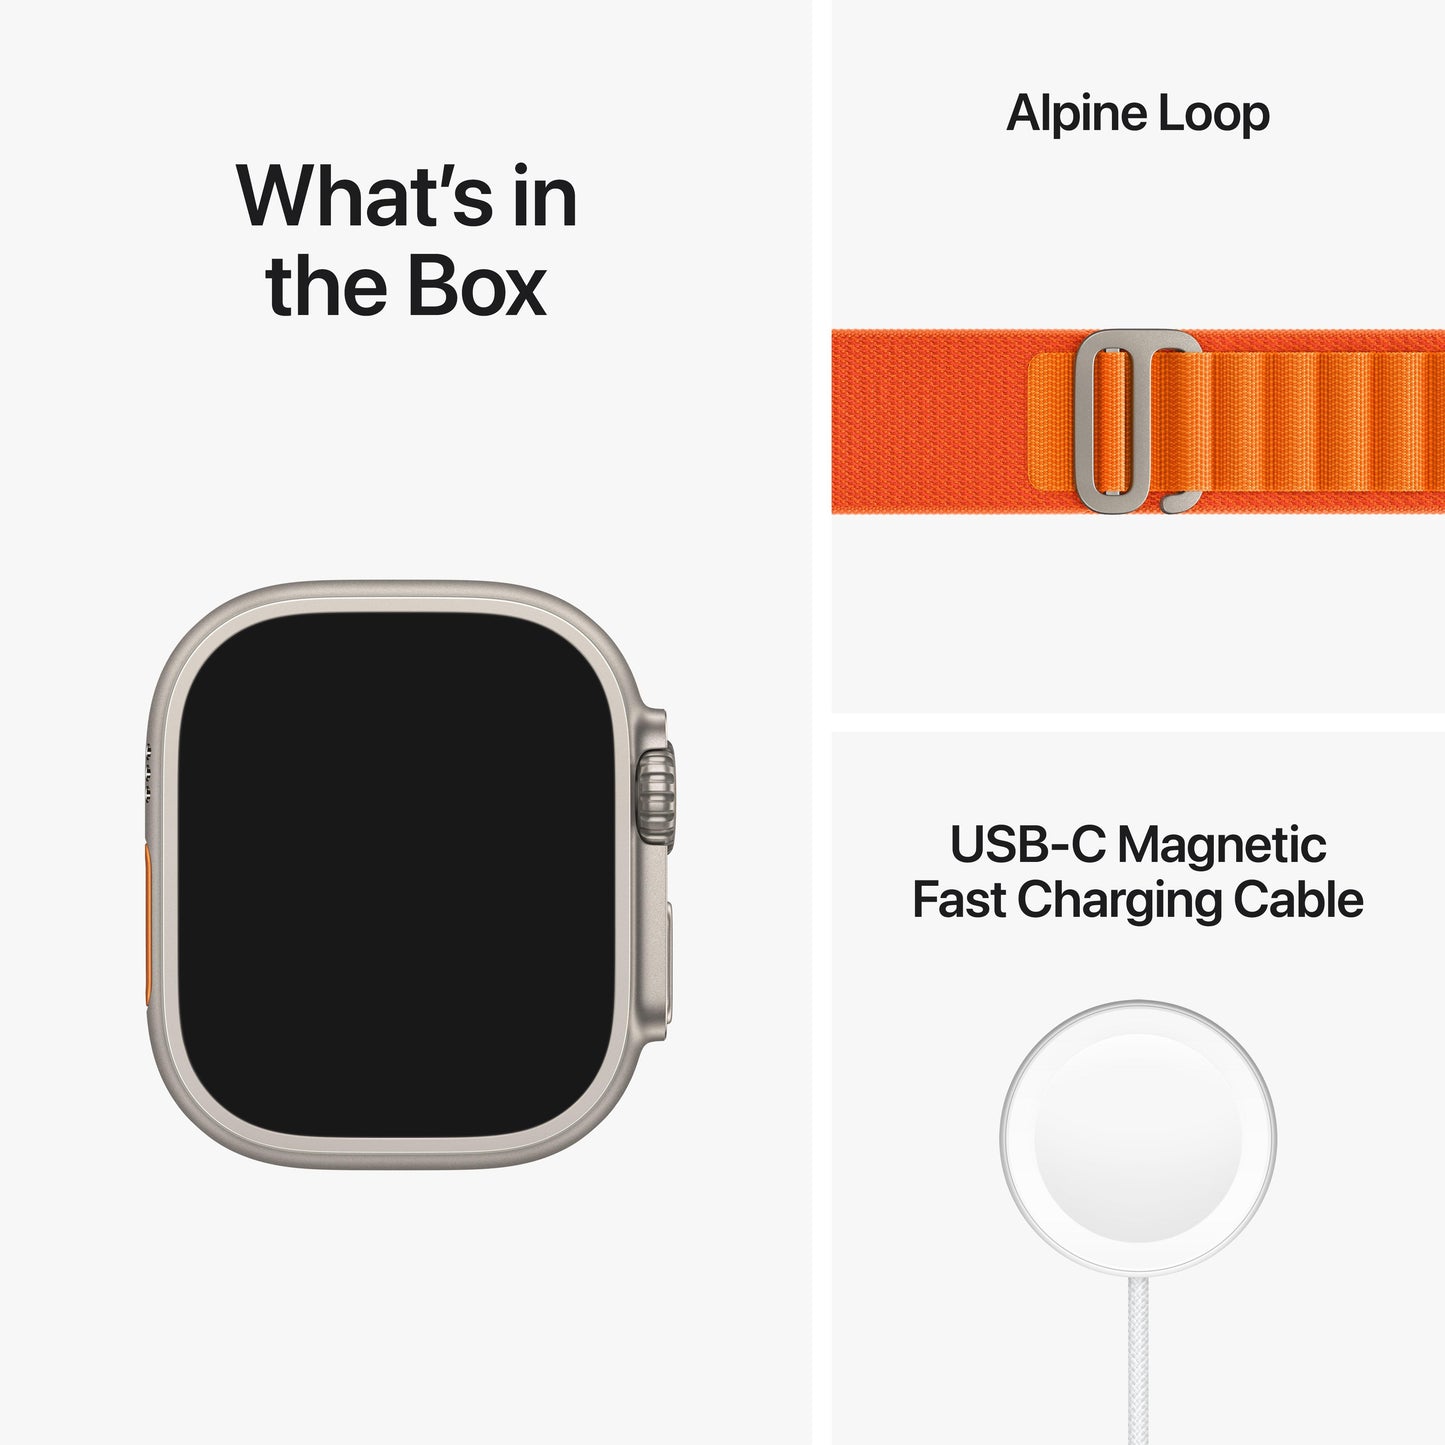 Apple Watch Ultra (GPS + Cellular) • 49-mm kast van titanium • Oranje Alpine‑bandje - L